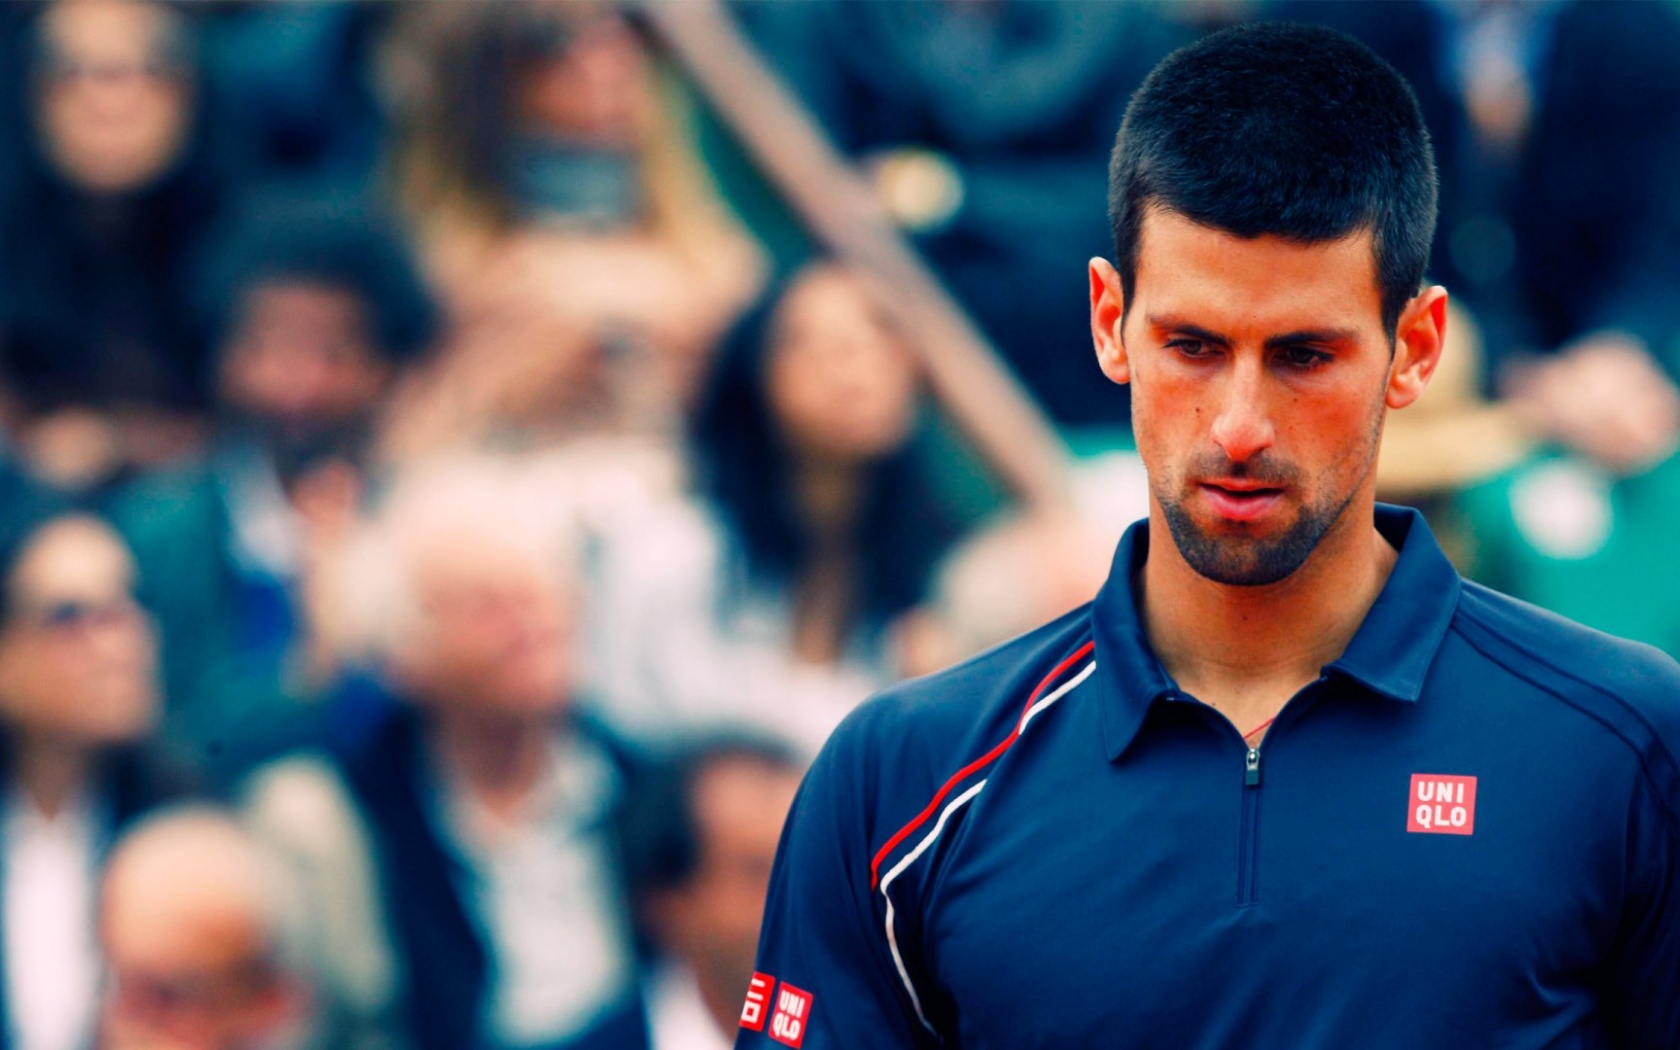 Novak Djokovic - Tennis Player